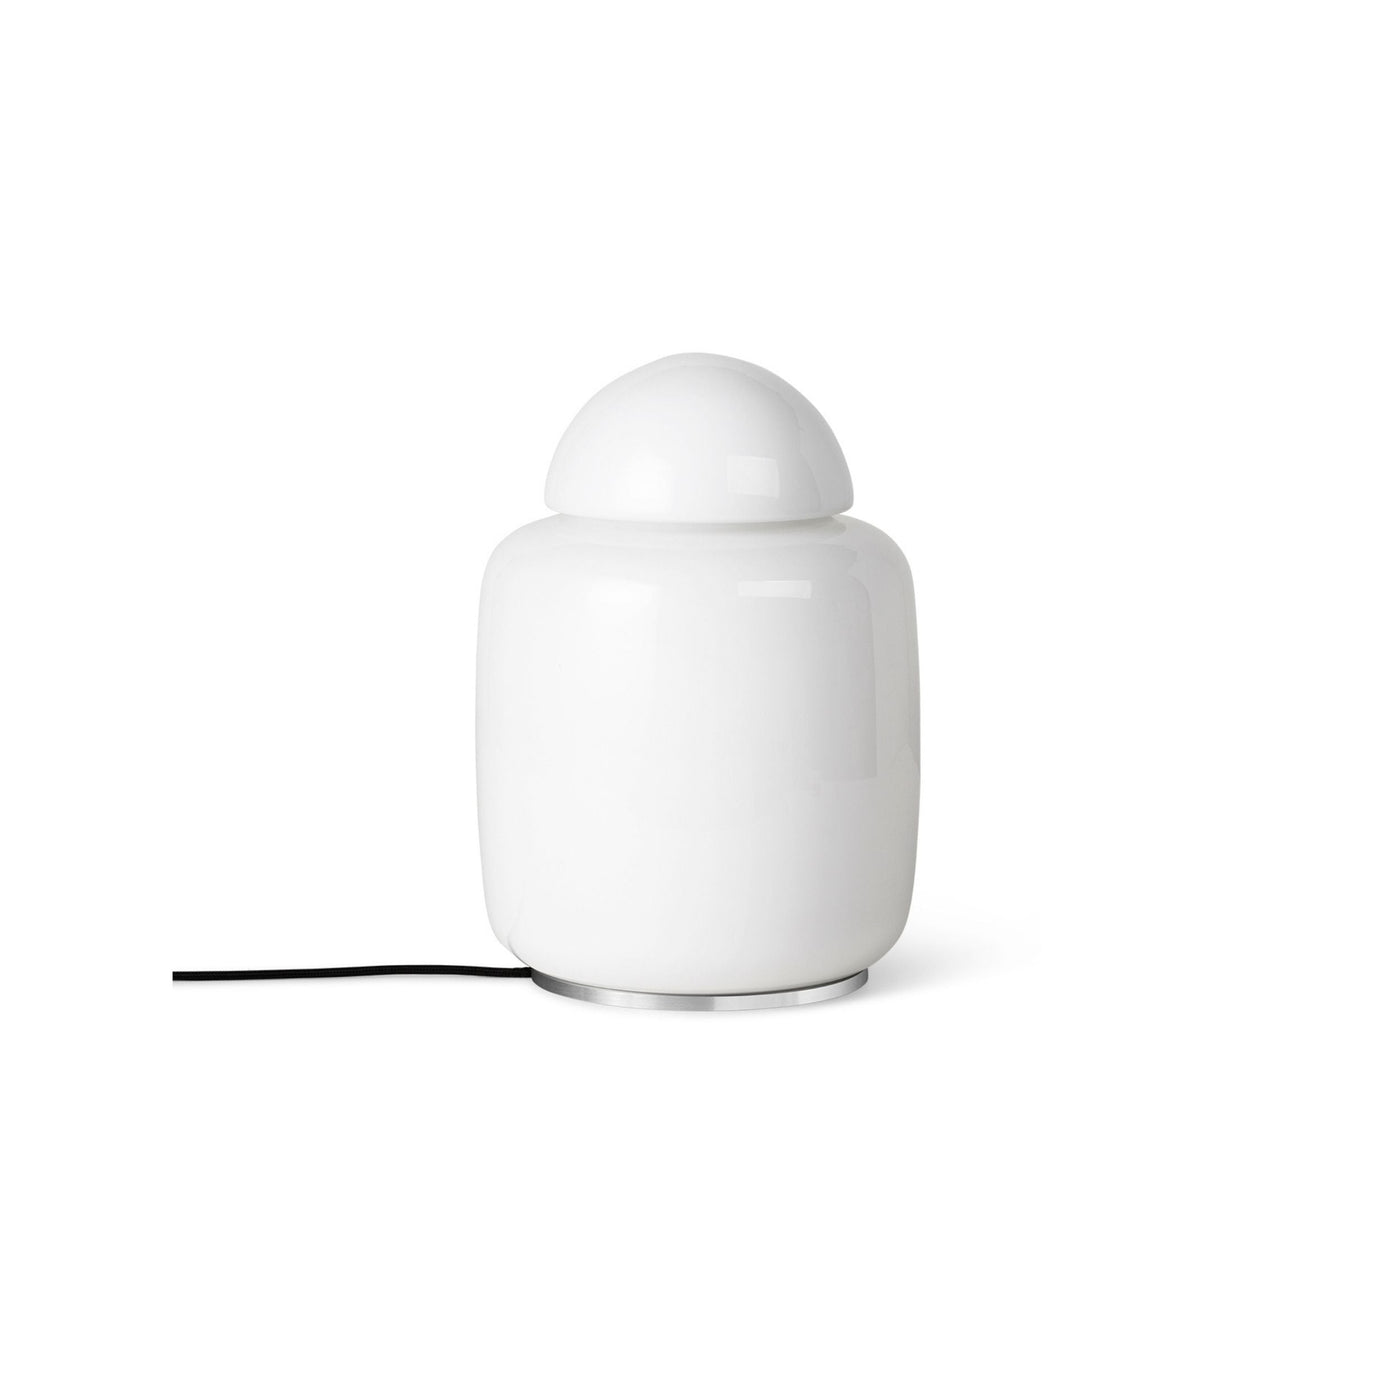 Ferm Living Bell Lamp, shop online at someday designs